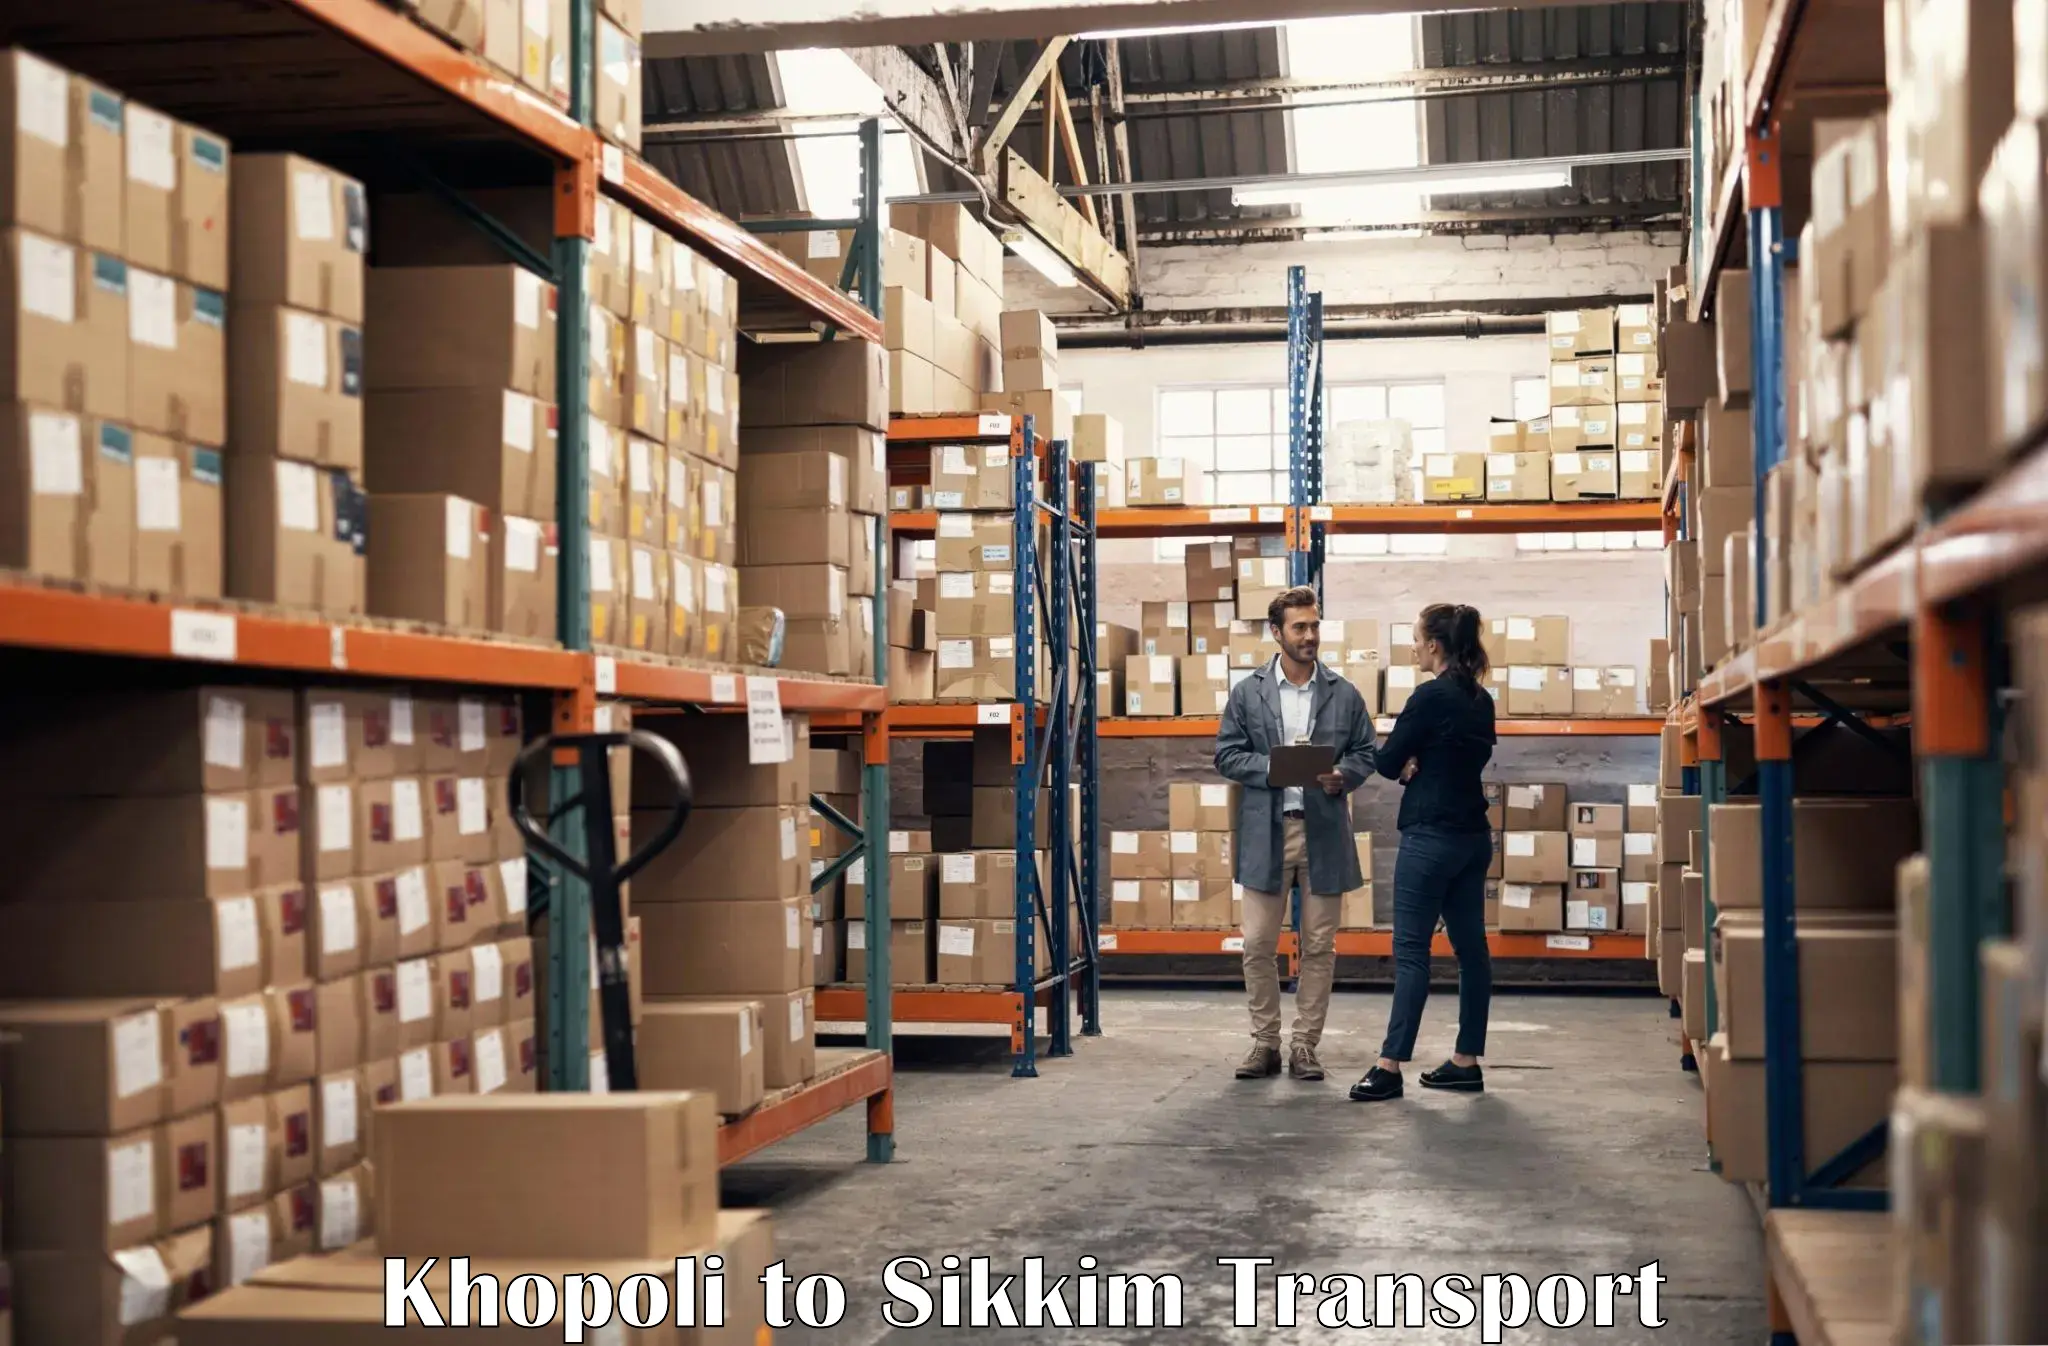 Delivery service Khopoli to Sikkim